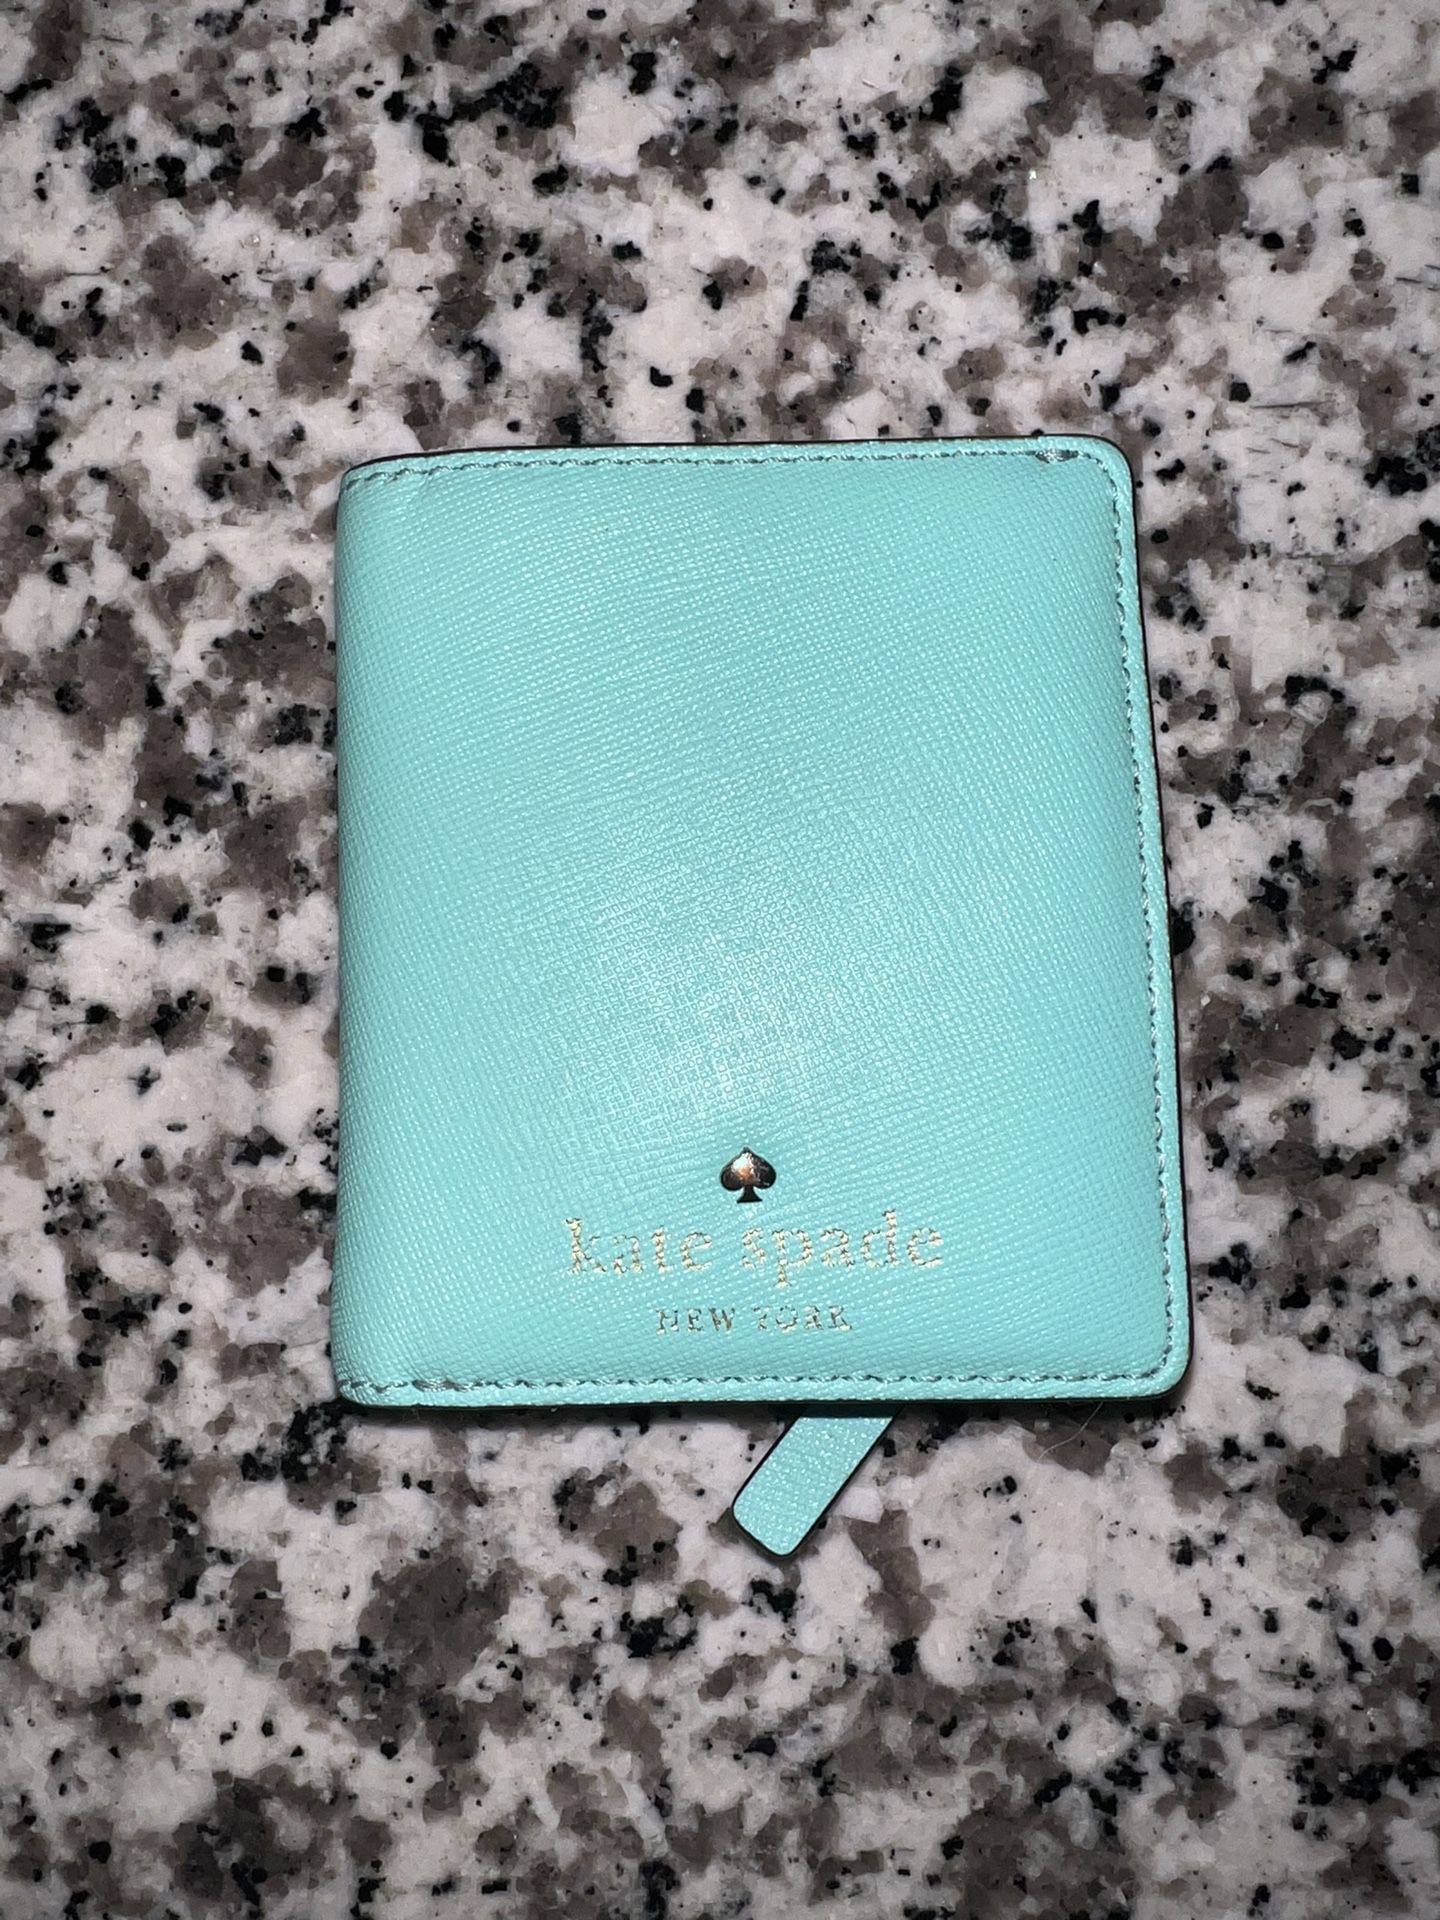 Kate Spade Mini Teal Wallet 